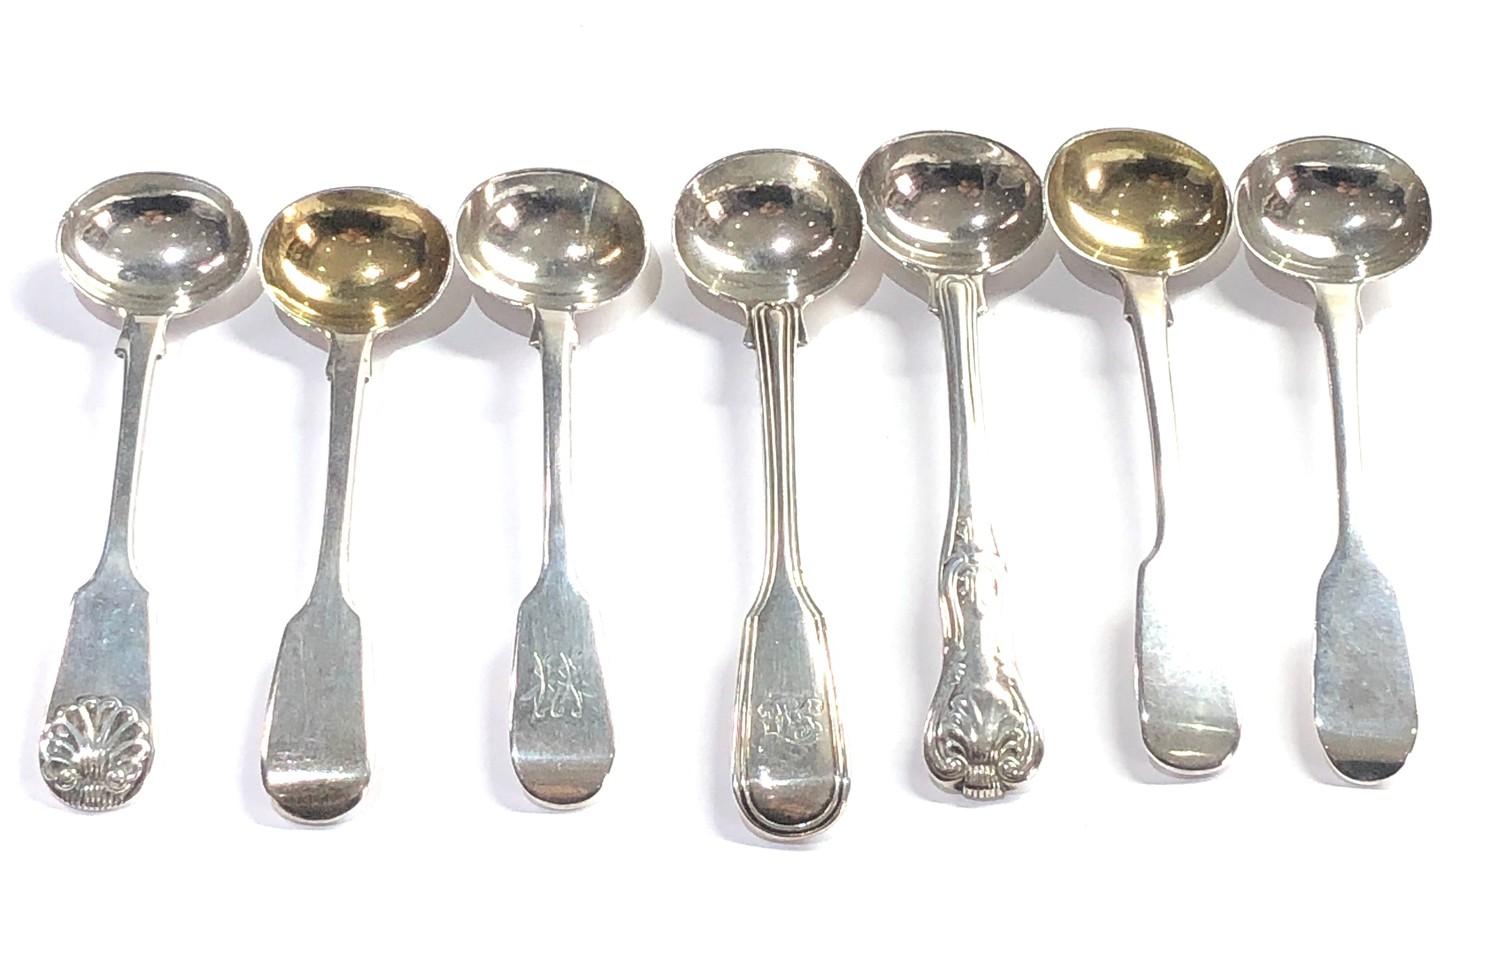 7 Antique silver mustard spoons by George Adams